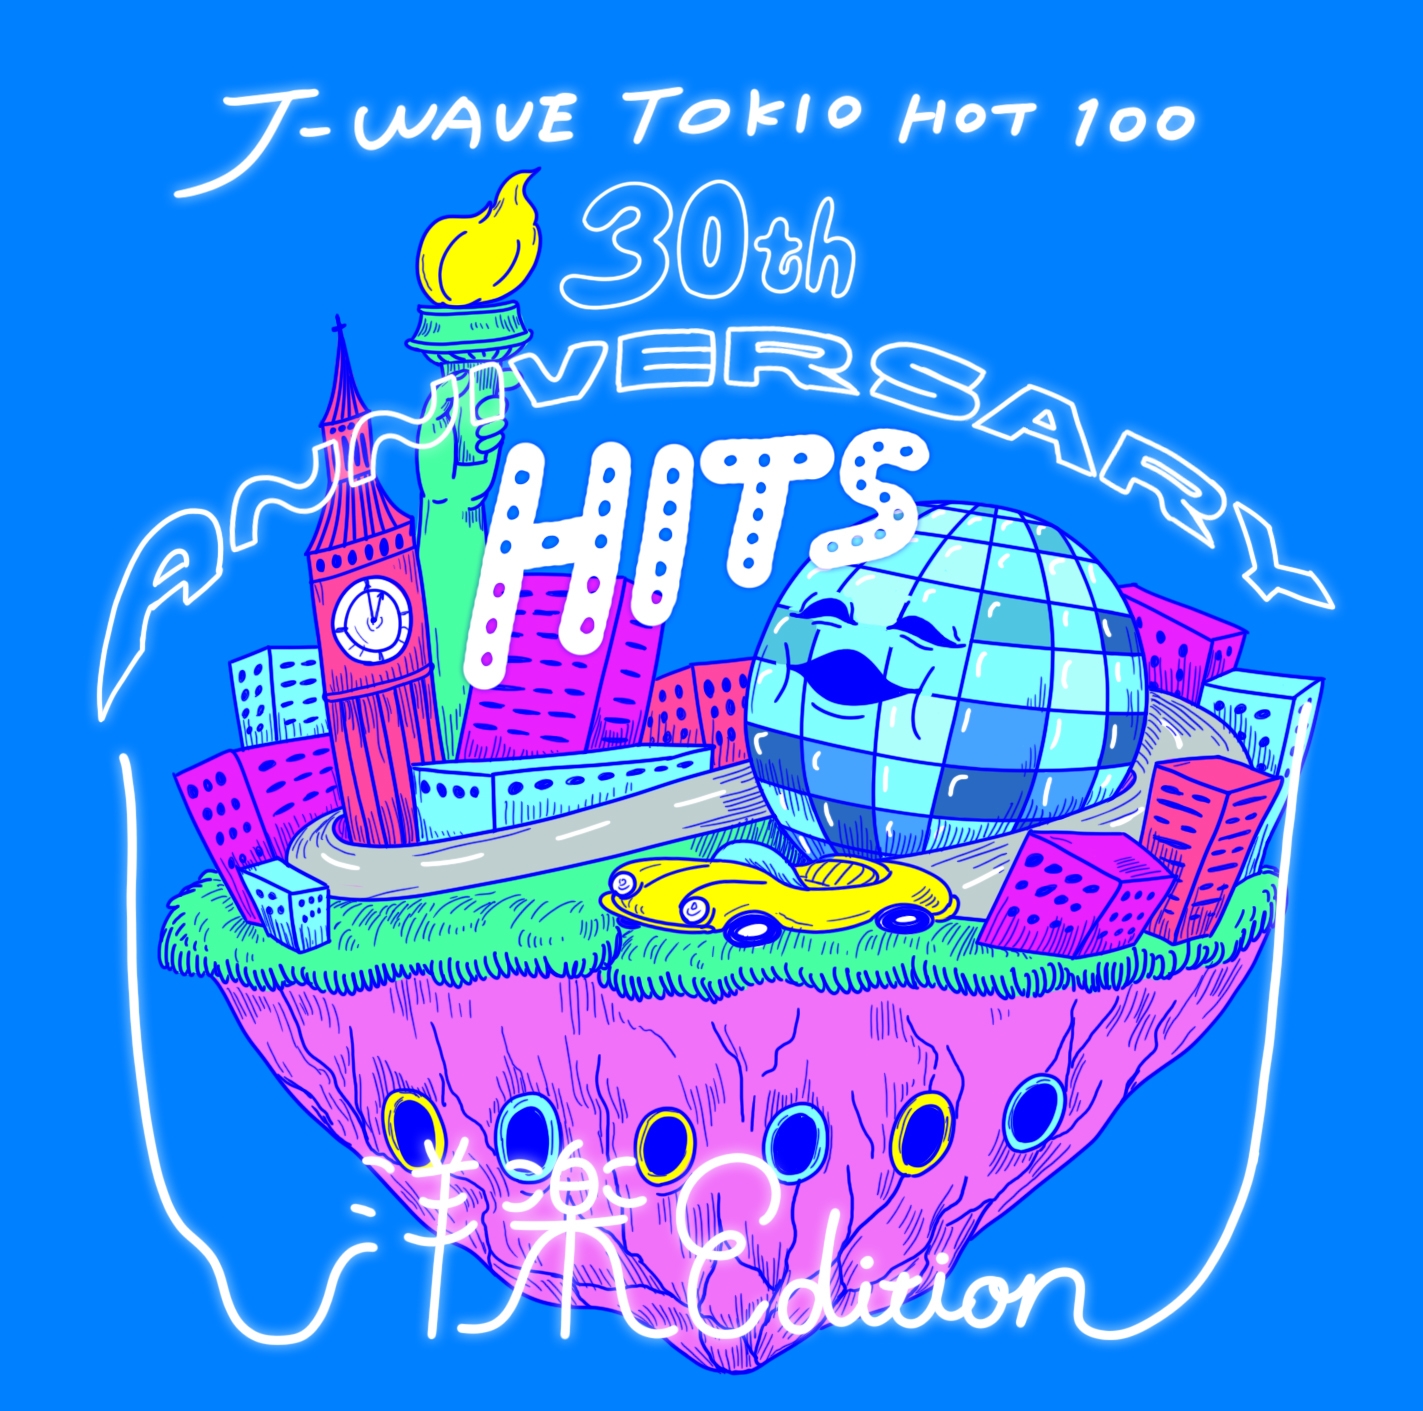 J-WAVEが30年間に生み出したヒット曲の集大成！『J-WAVE TOKIO HOT 100 30th ANNIVERSARY HITS 』J-POP EDITION＆洋楽EDITION